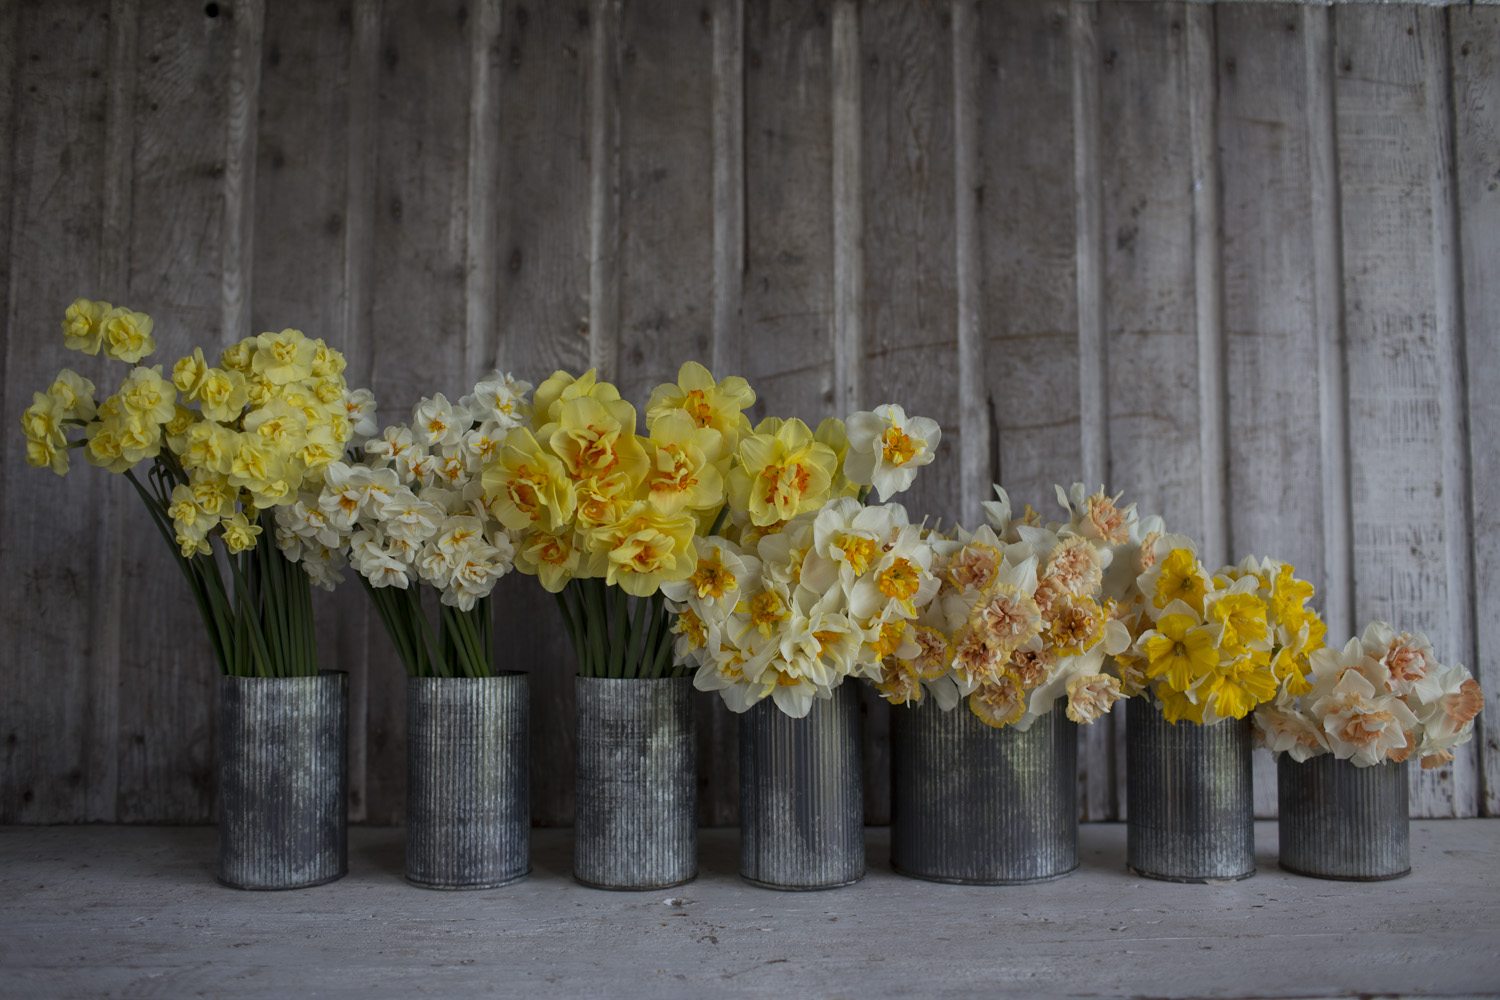 Vases of daffodils